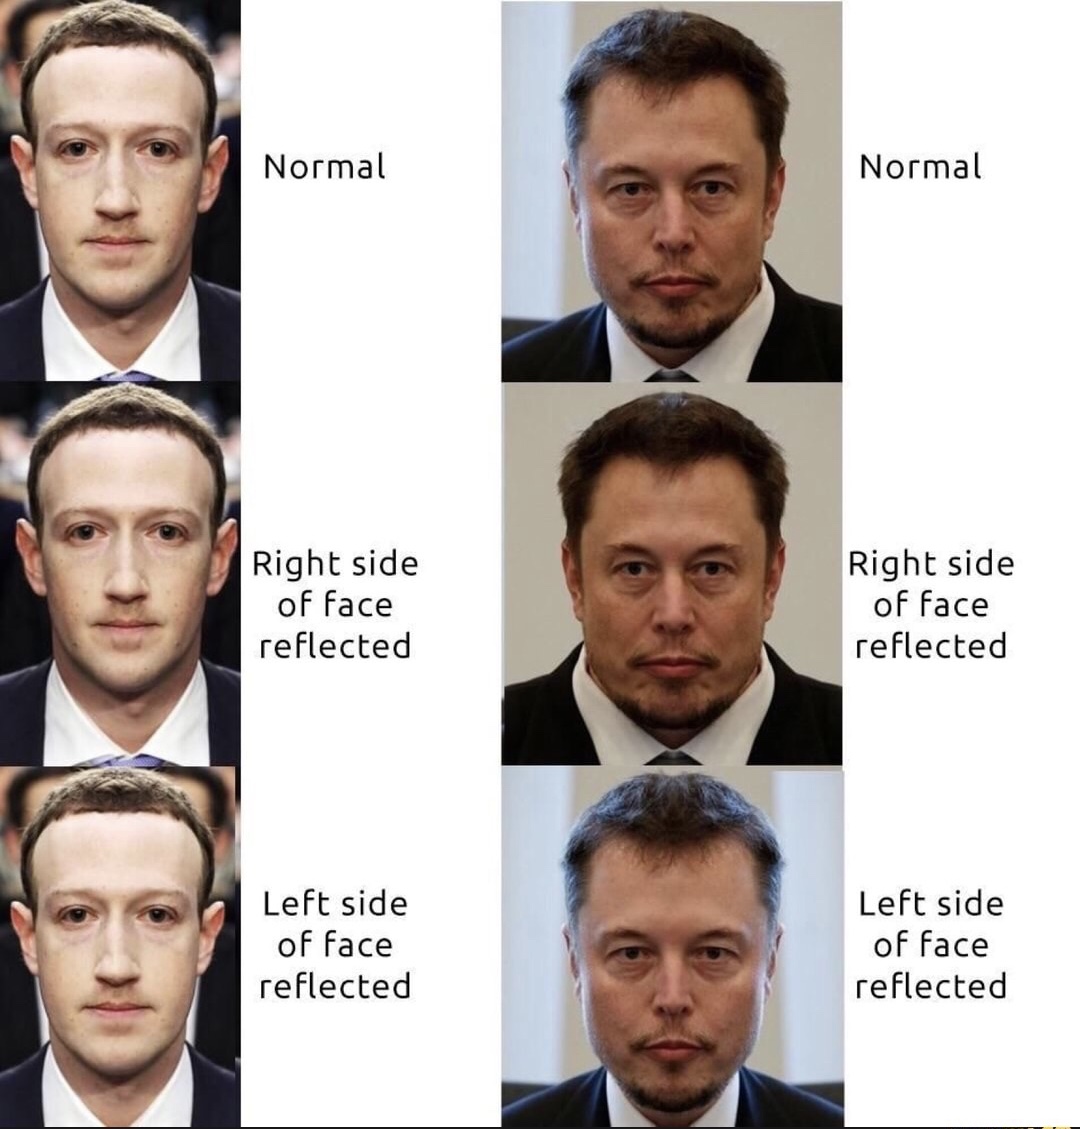 zuckerberg face symmetry - Normal Normal Right side of face reflected Right side of face reflected Left side of face reflected Left side of face reflected